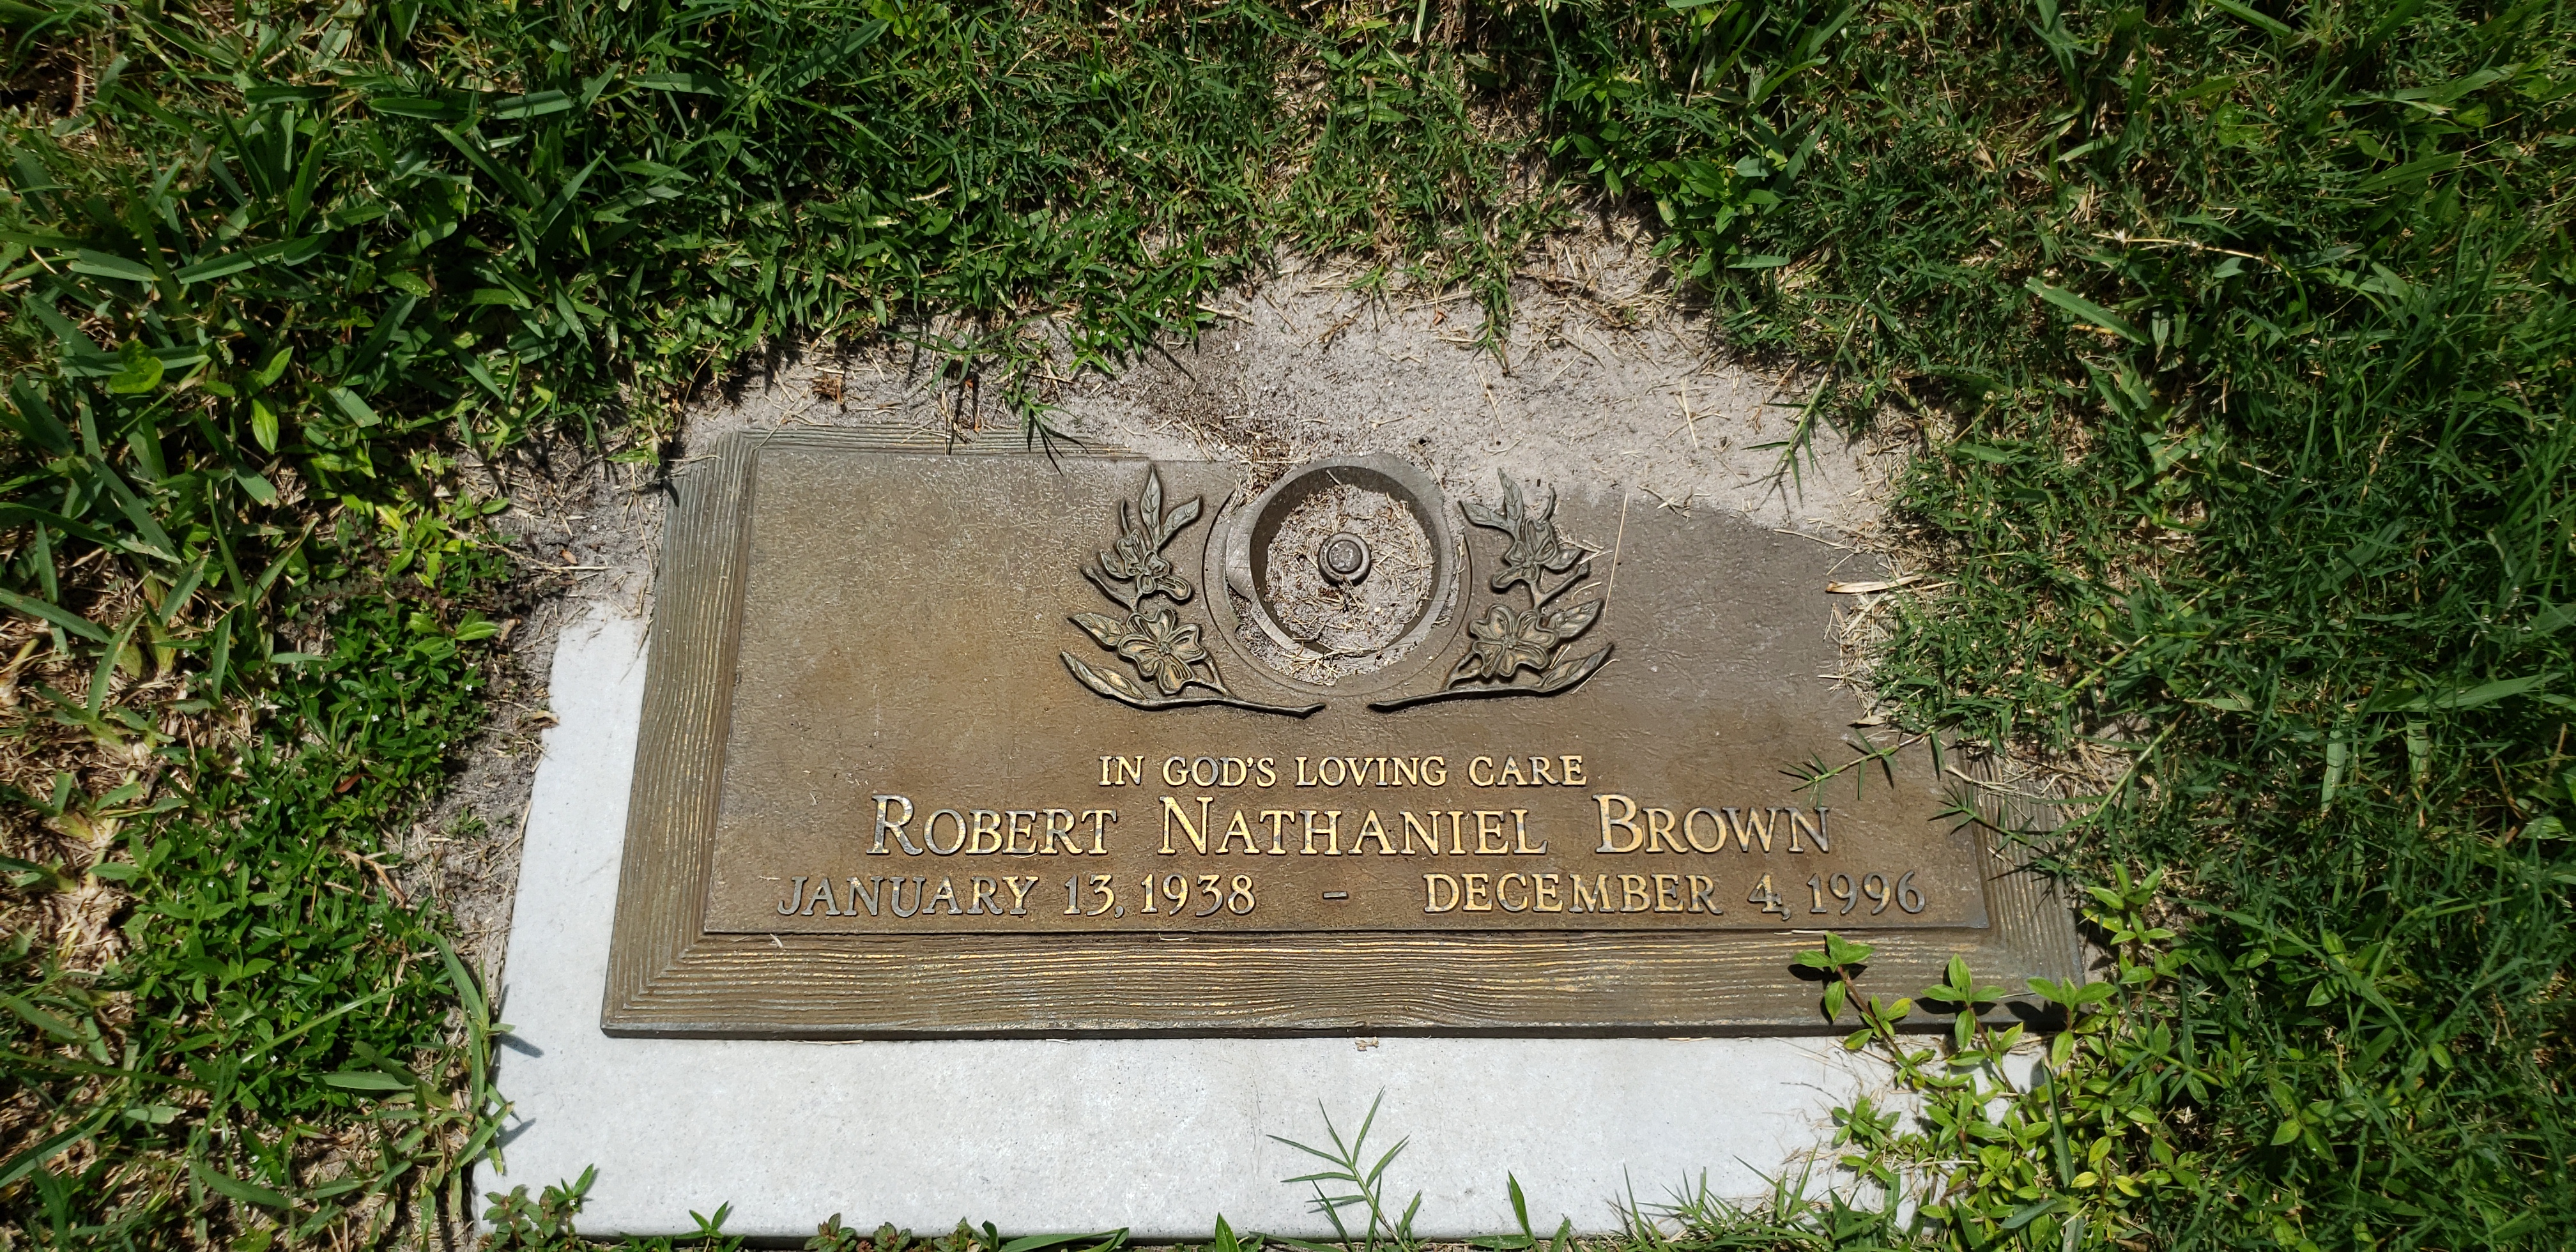 Robert Nathaniel Brown